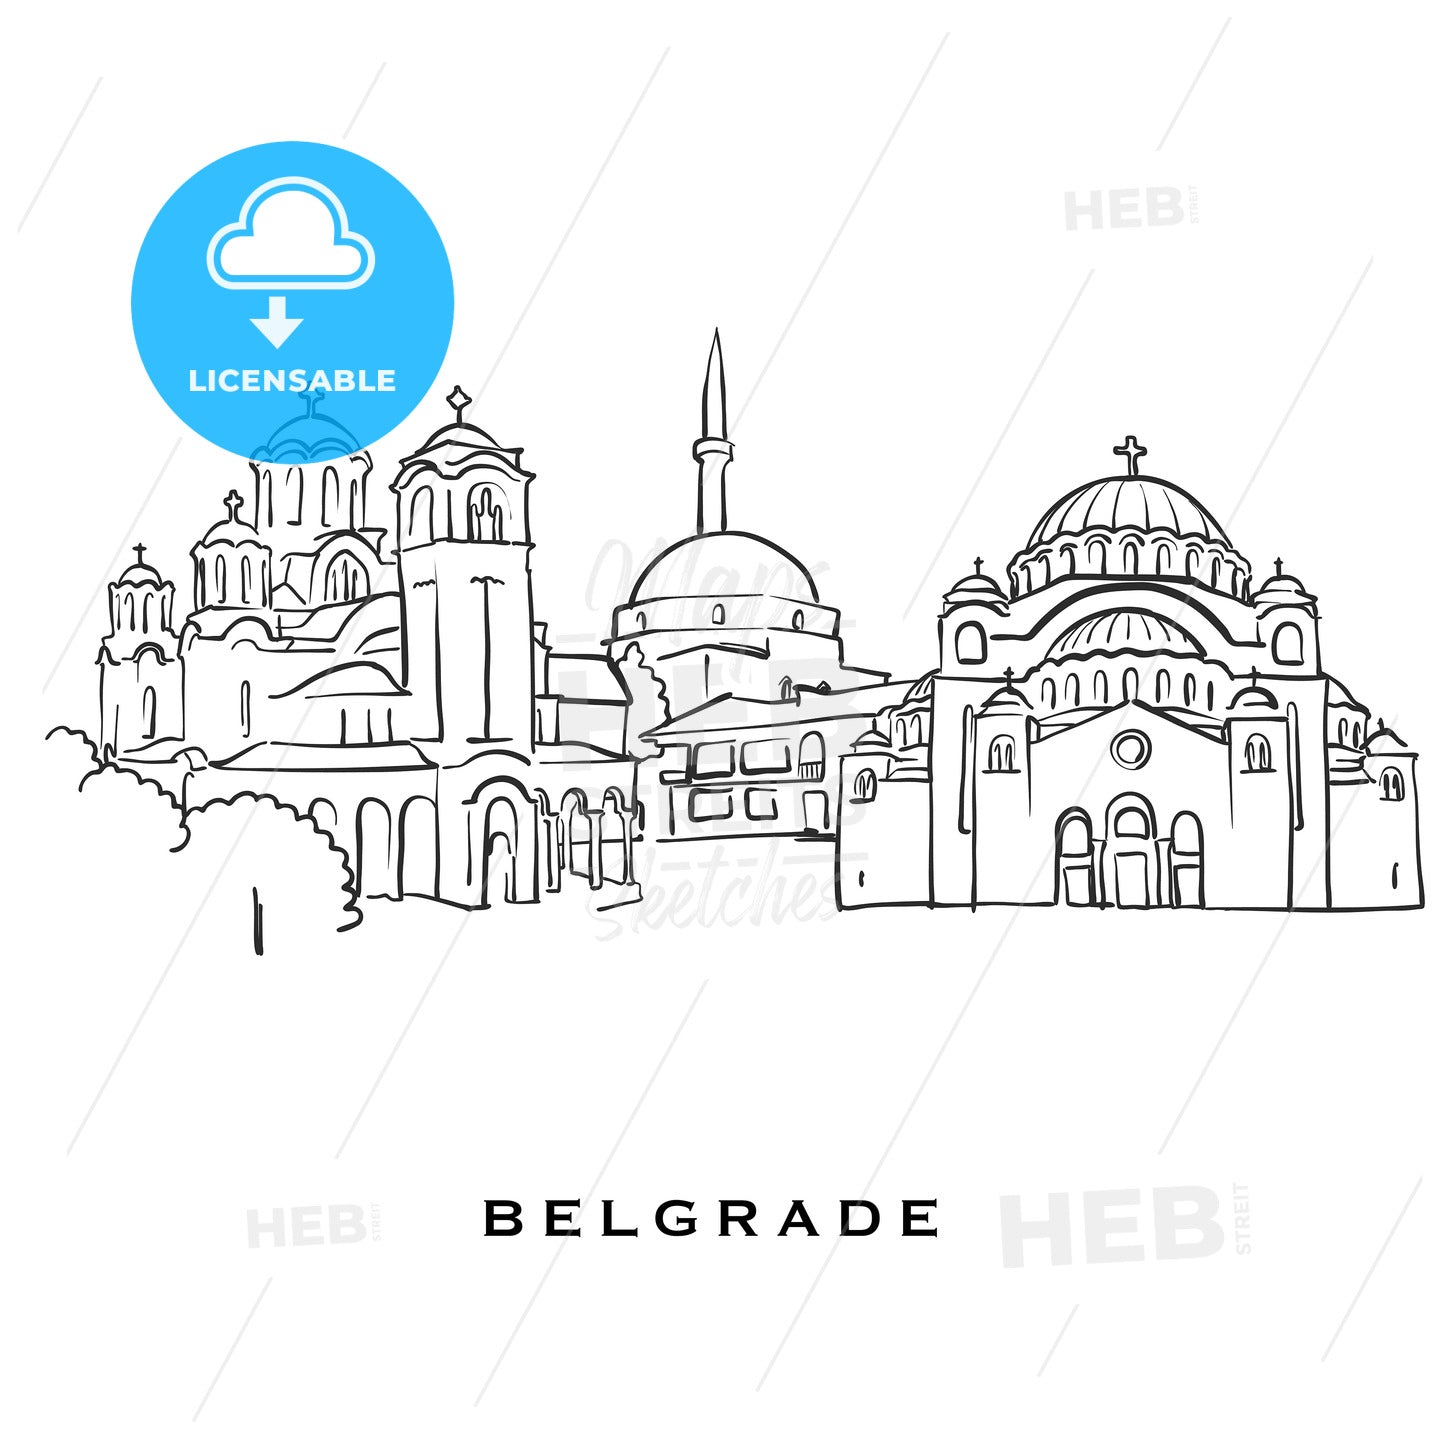 Belgrade Serbia famous architecture – instant download